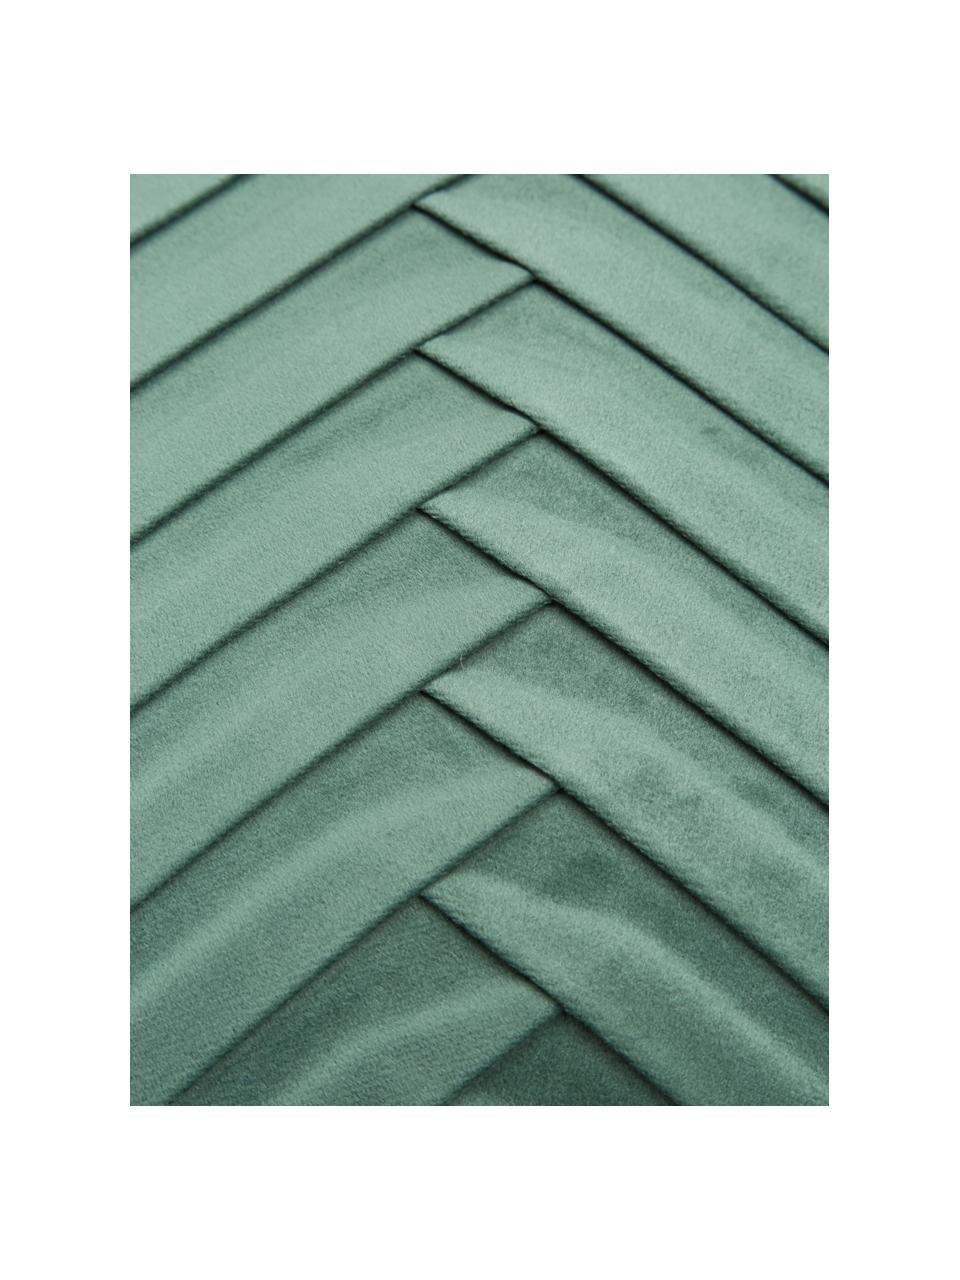 Samt-Kissenhülle Lucie mit Struktur-Oberfläche, 100 % Samt (Polyester), Mintgrün, B 30 x L 50 cm